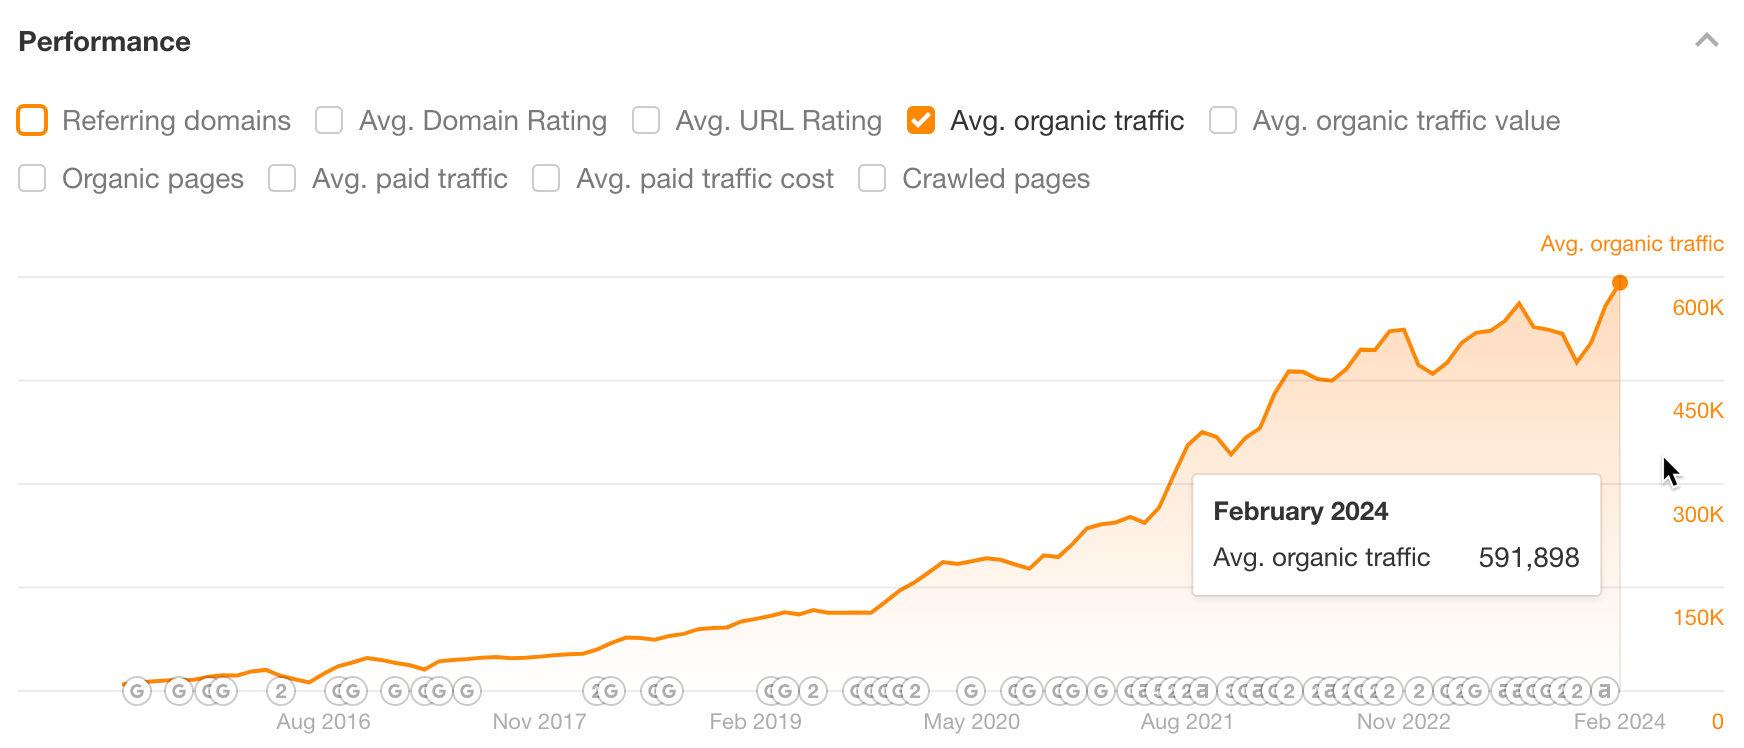 Organic performance graph via Ahrefs.